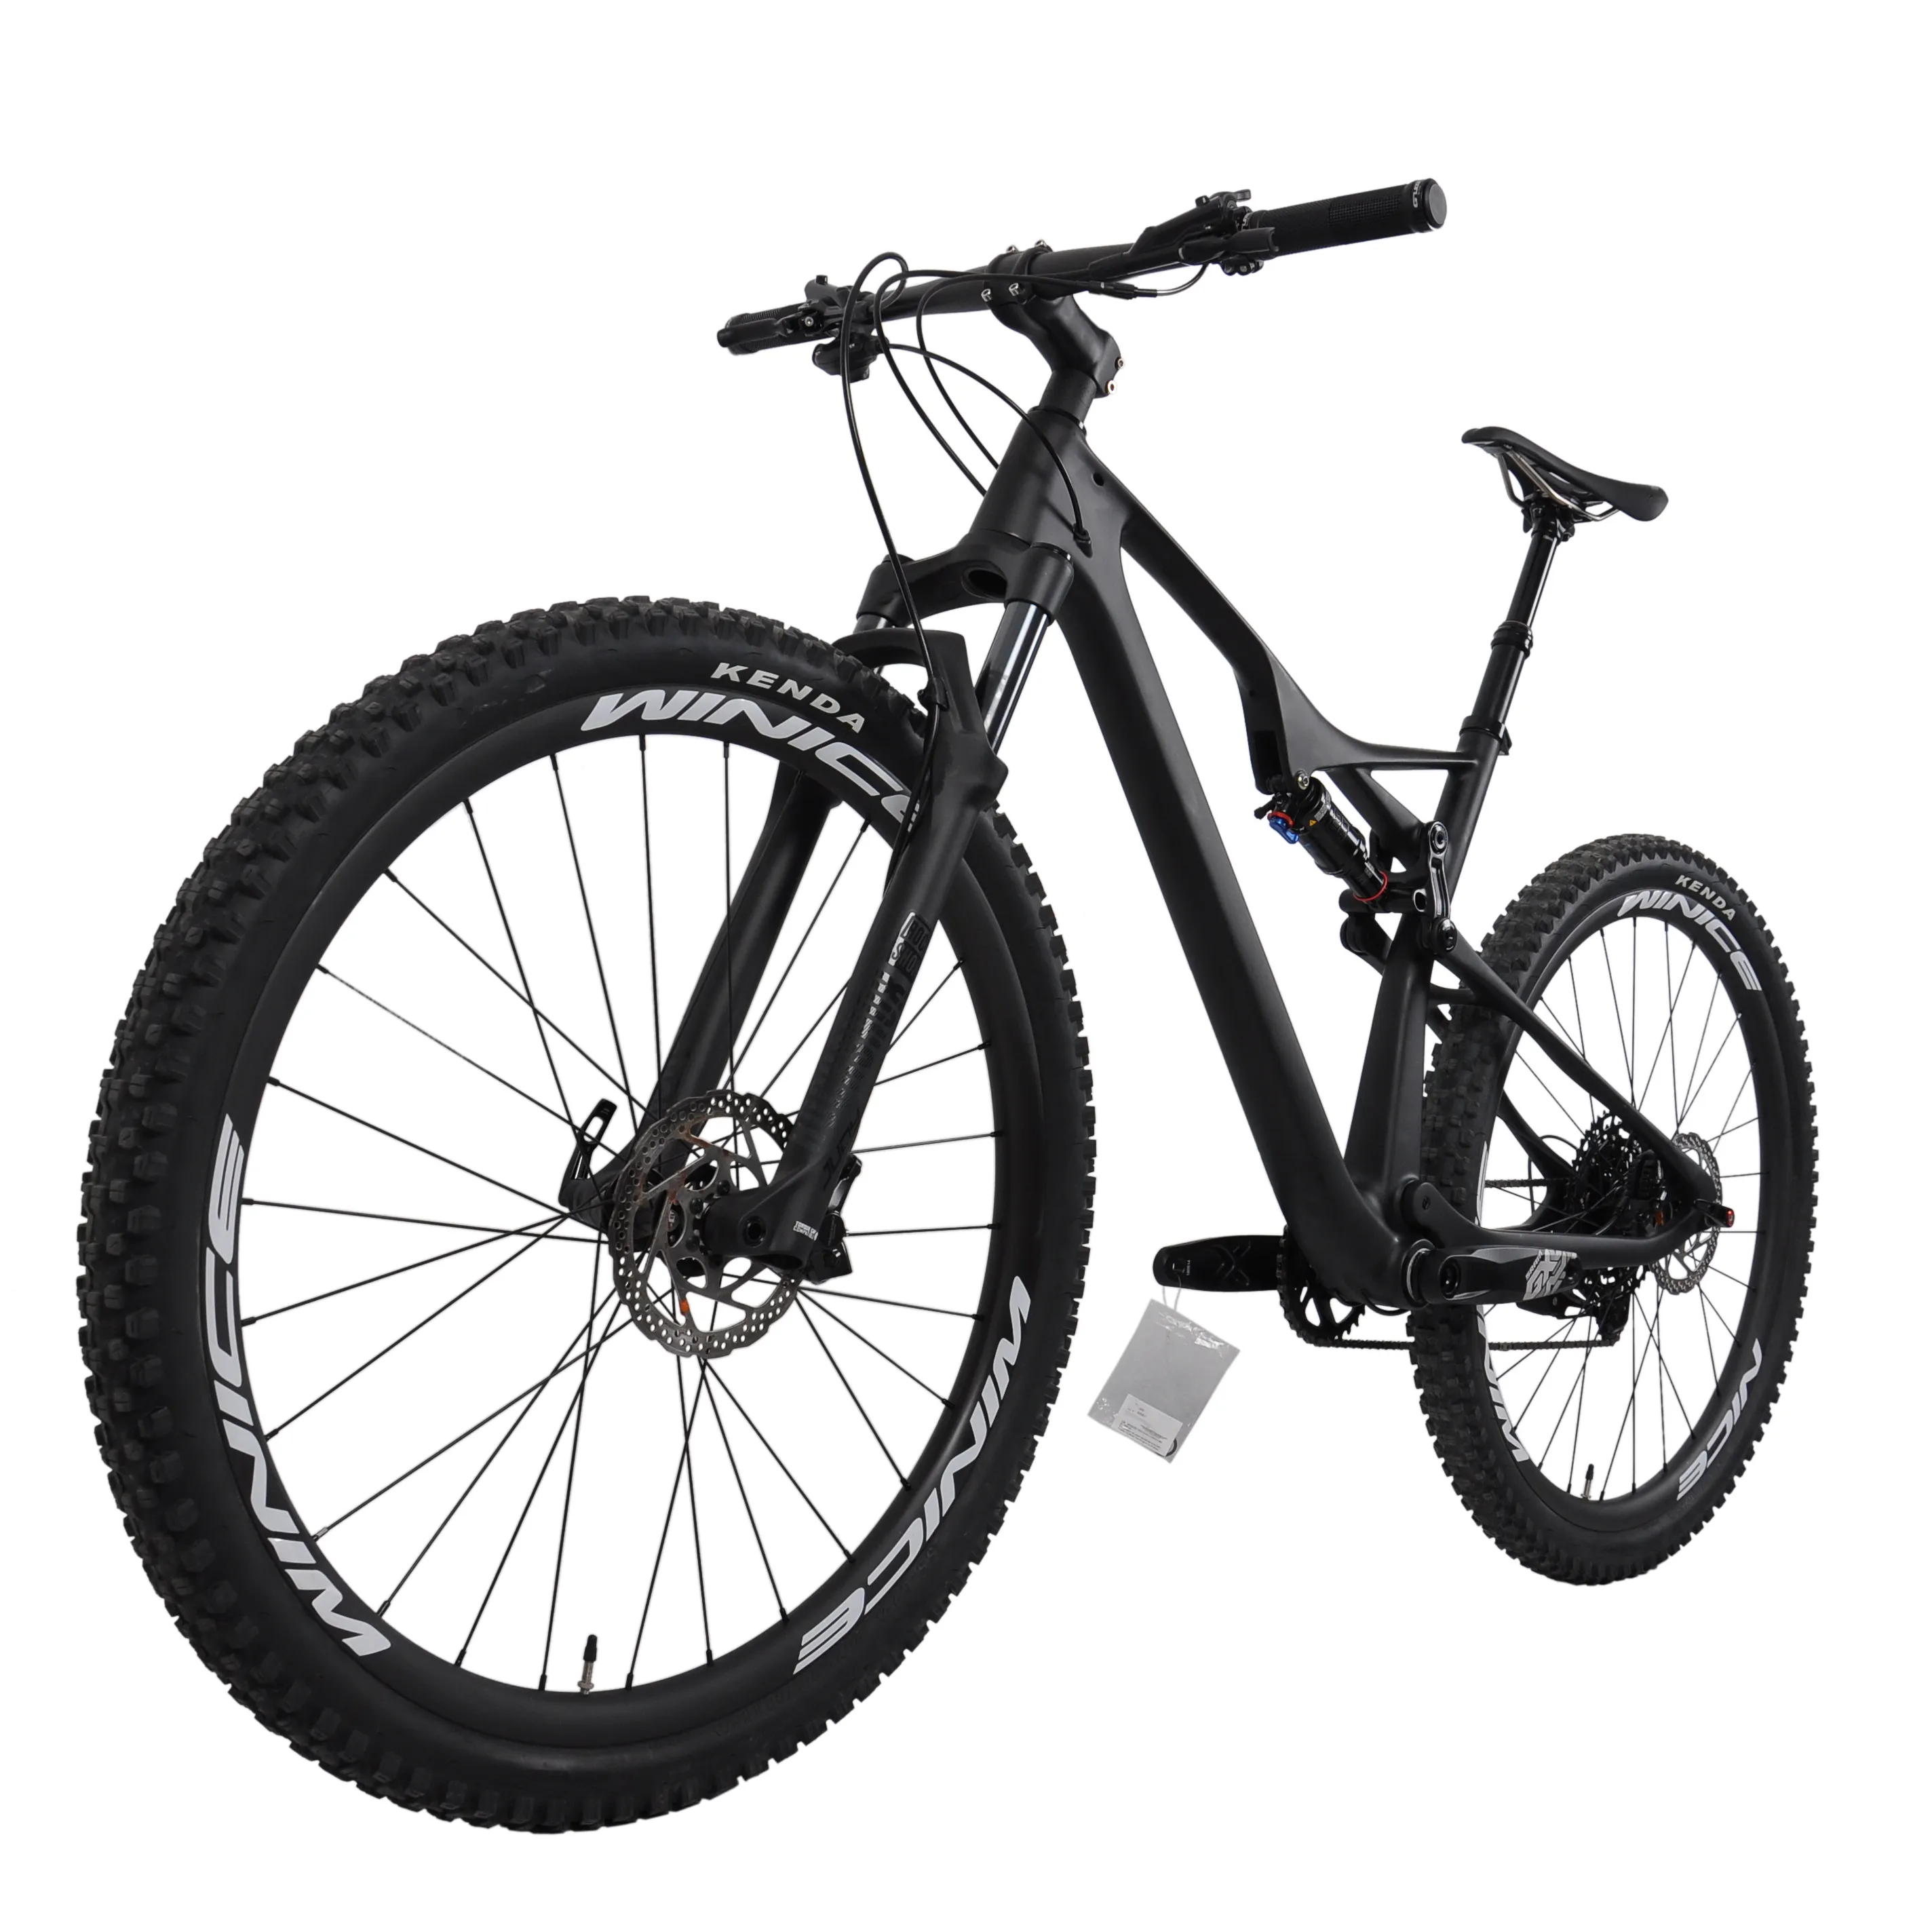 2021 EPS 만든 T800 탄소 29er 산악 자전거 전체 서스펜션 XC MTB 자전거 UD 매트 프레임 29 인치 스루 액슬 142mm